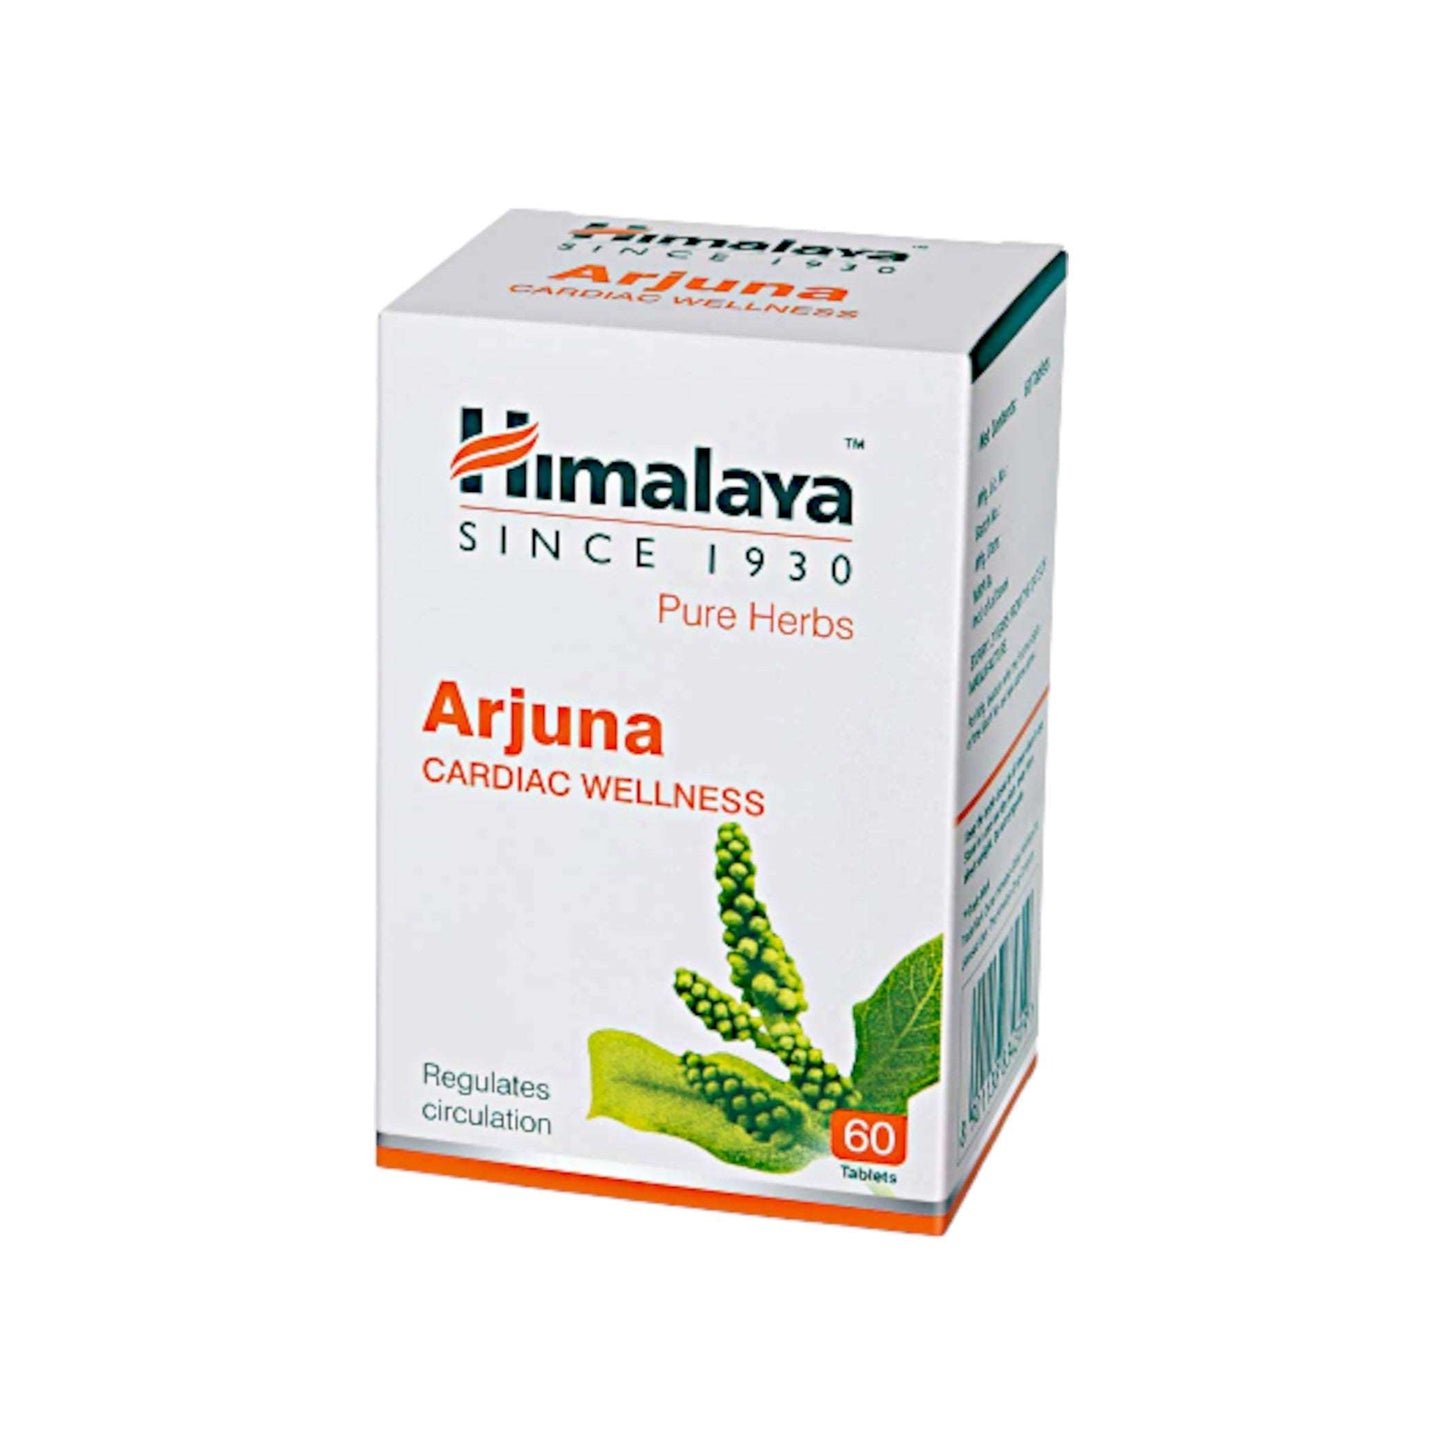 Image: Himalaya Herbals Arjuna 60 Tablets - Ayurvedic cardiac tonic for heart health and cholesterol support.